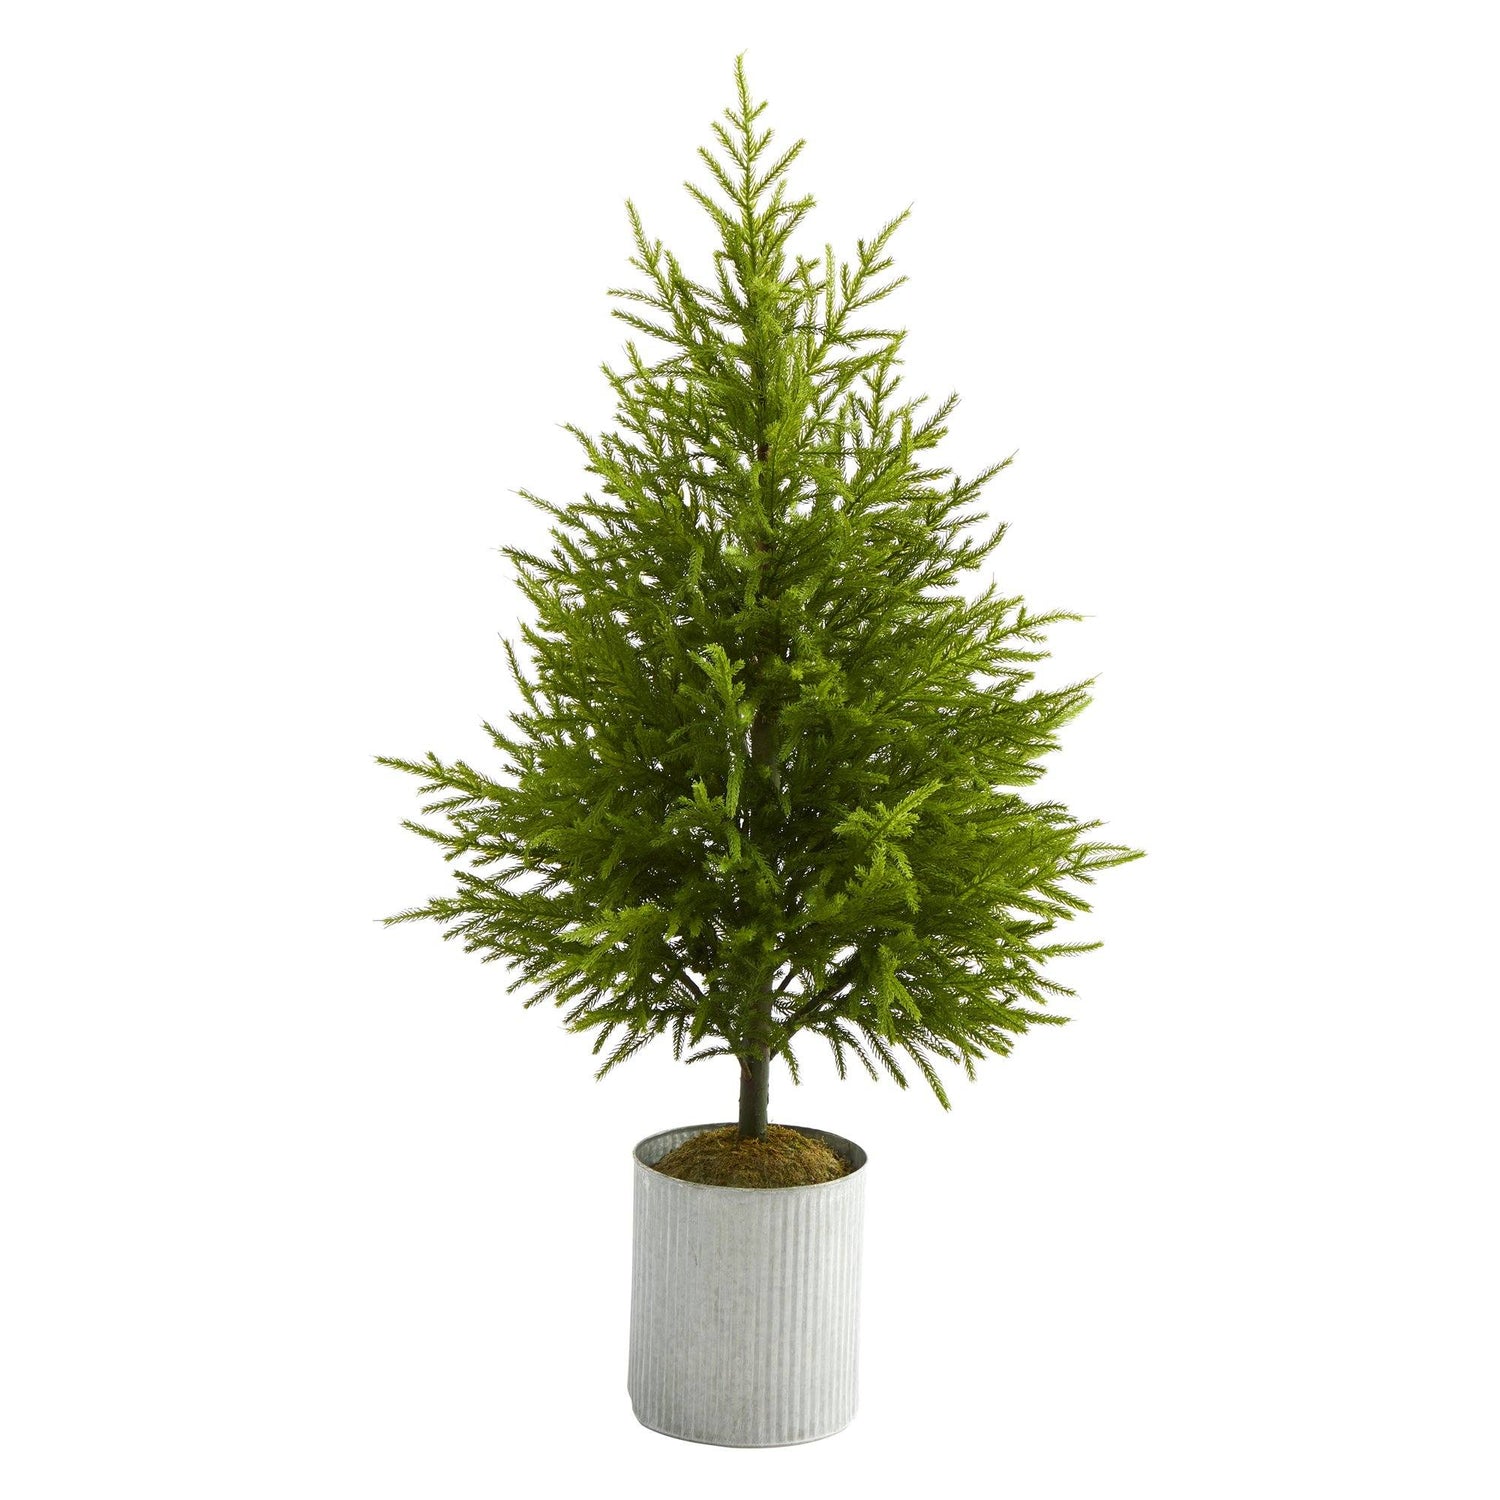 49” Norfolk Island Pine “Natural Look” Artificial Christmas Tree